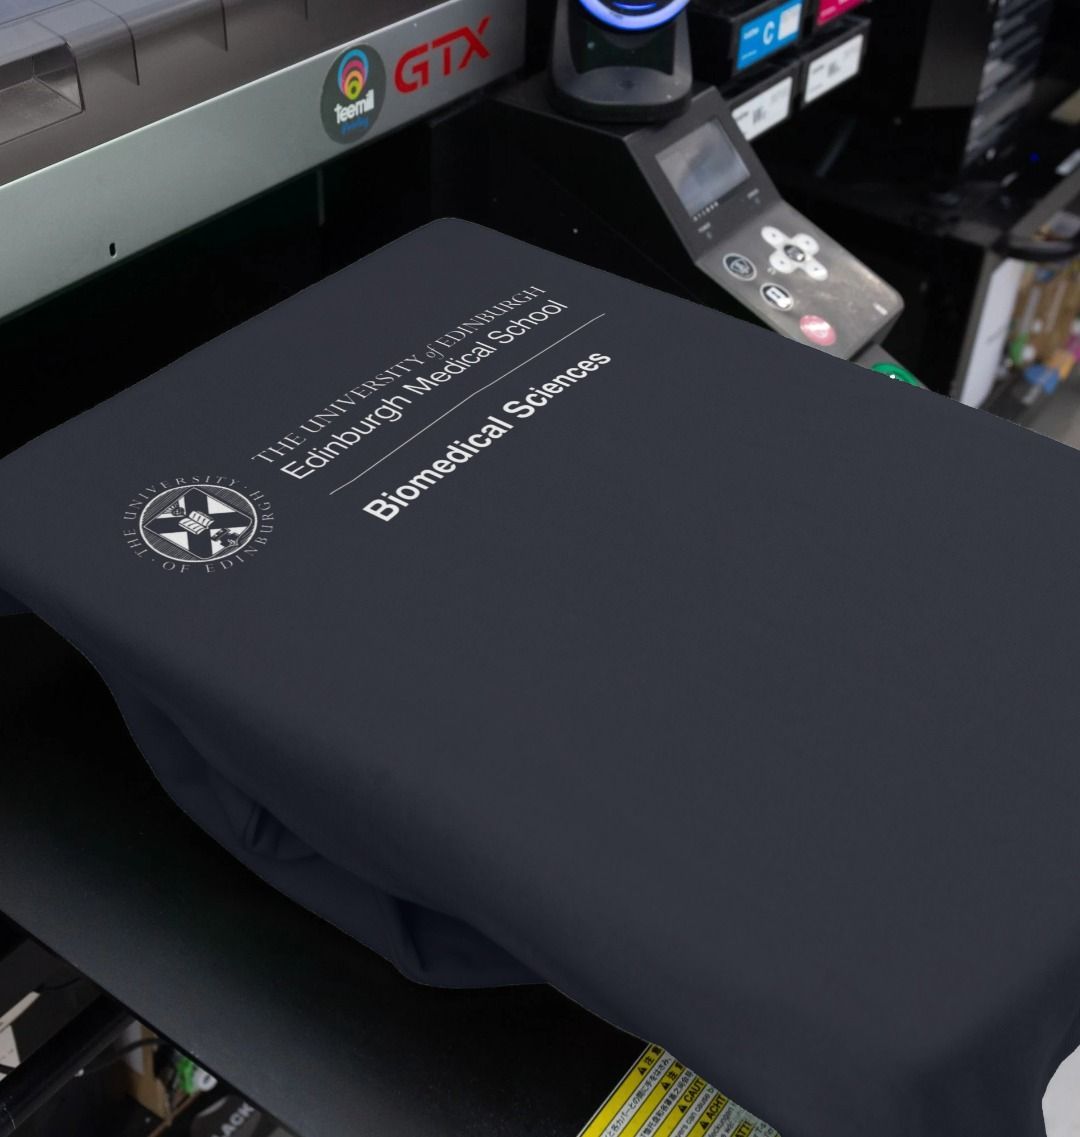 Our Edinburgh Medical School - Biomedical Sciences Sweatshirt being printed by our print on demand partner, teemill.